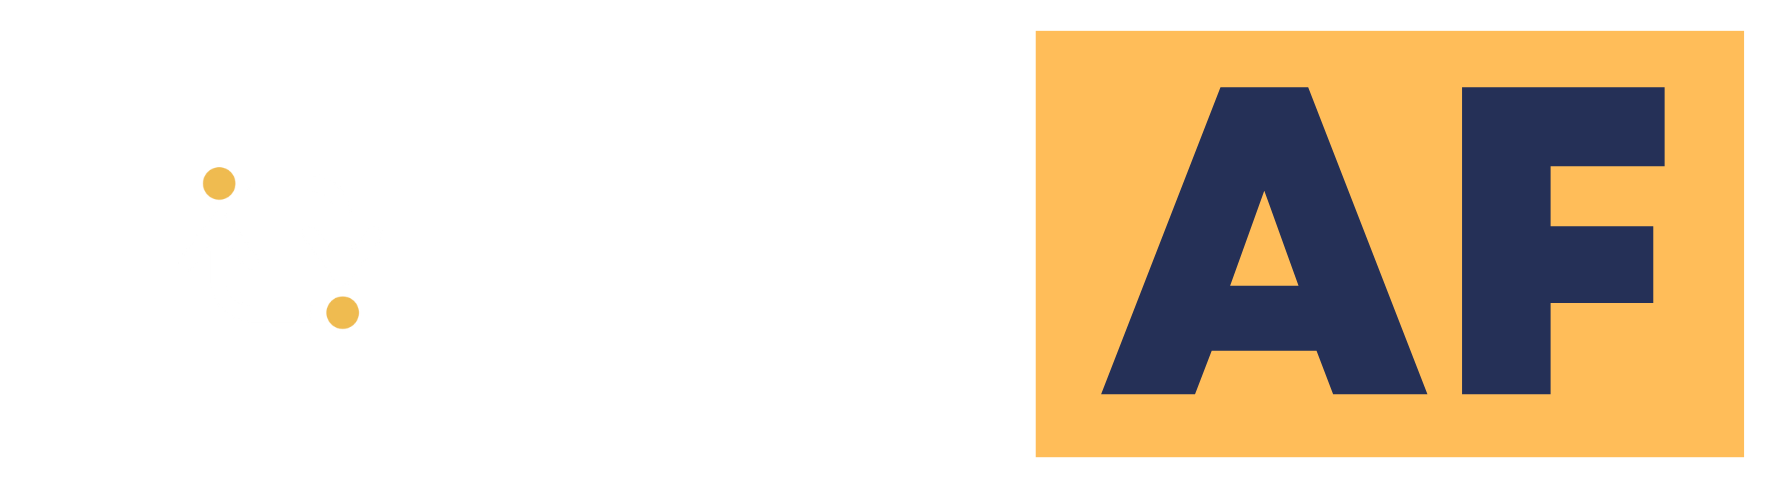 Socialaf logo